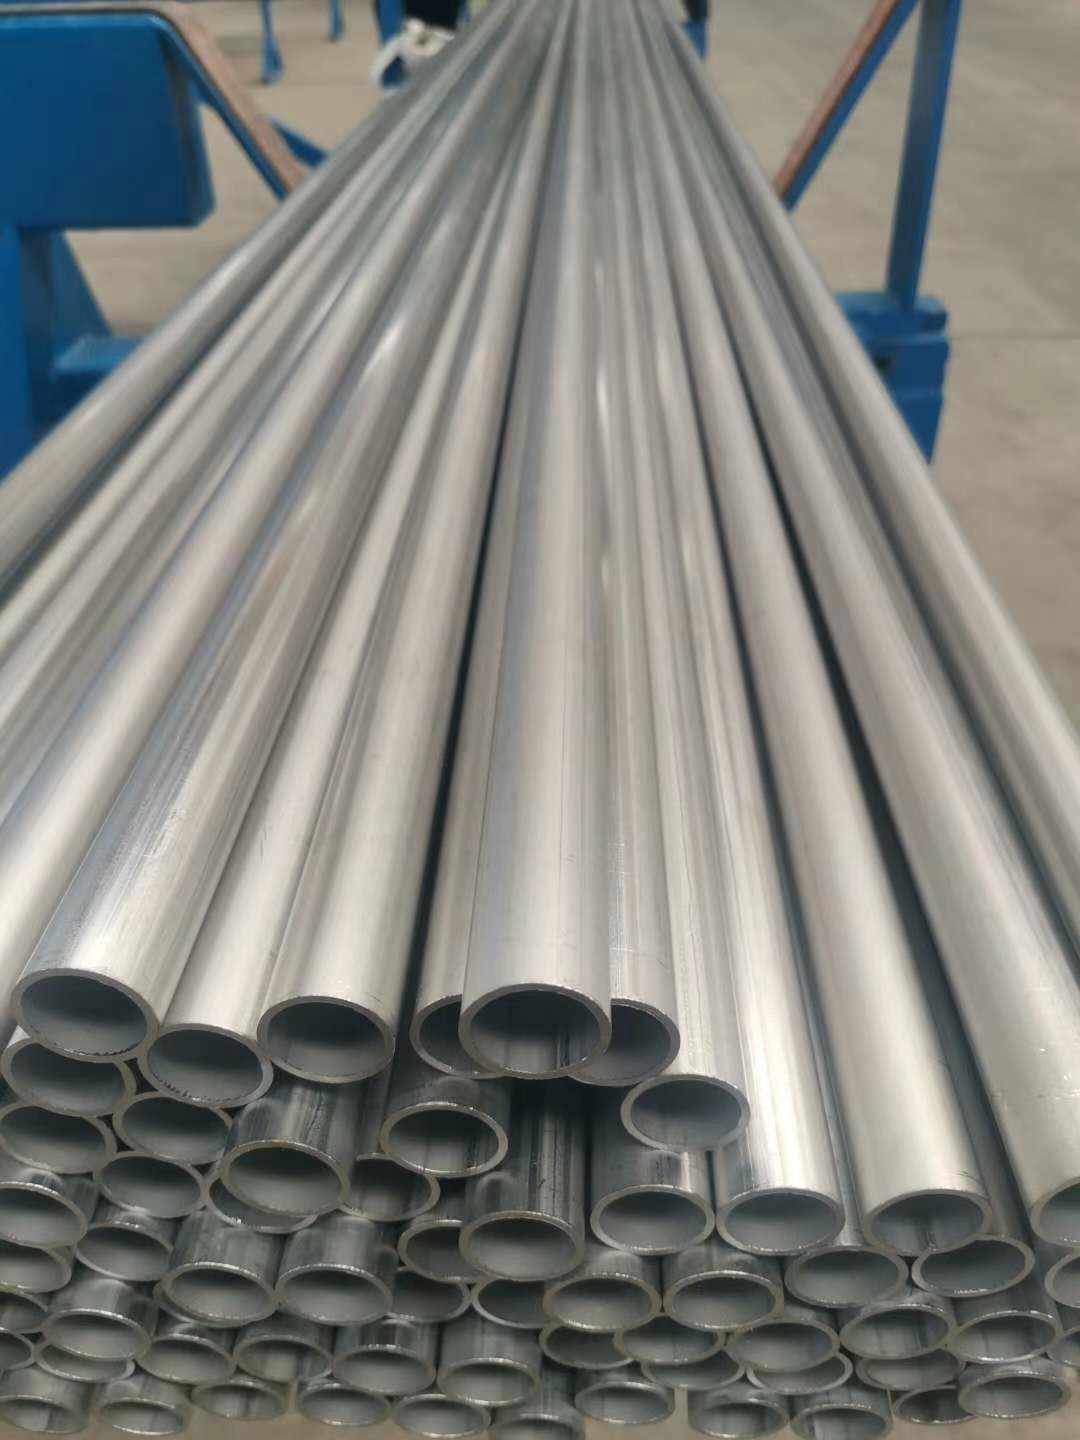 Stainless Steel Pipe - California - Anaheim ID1556172 2